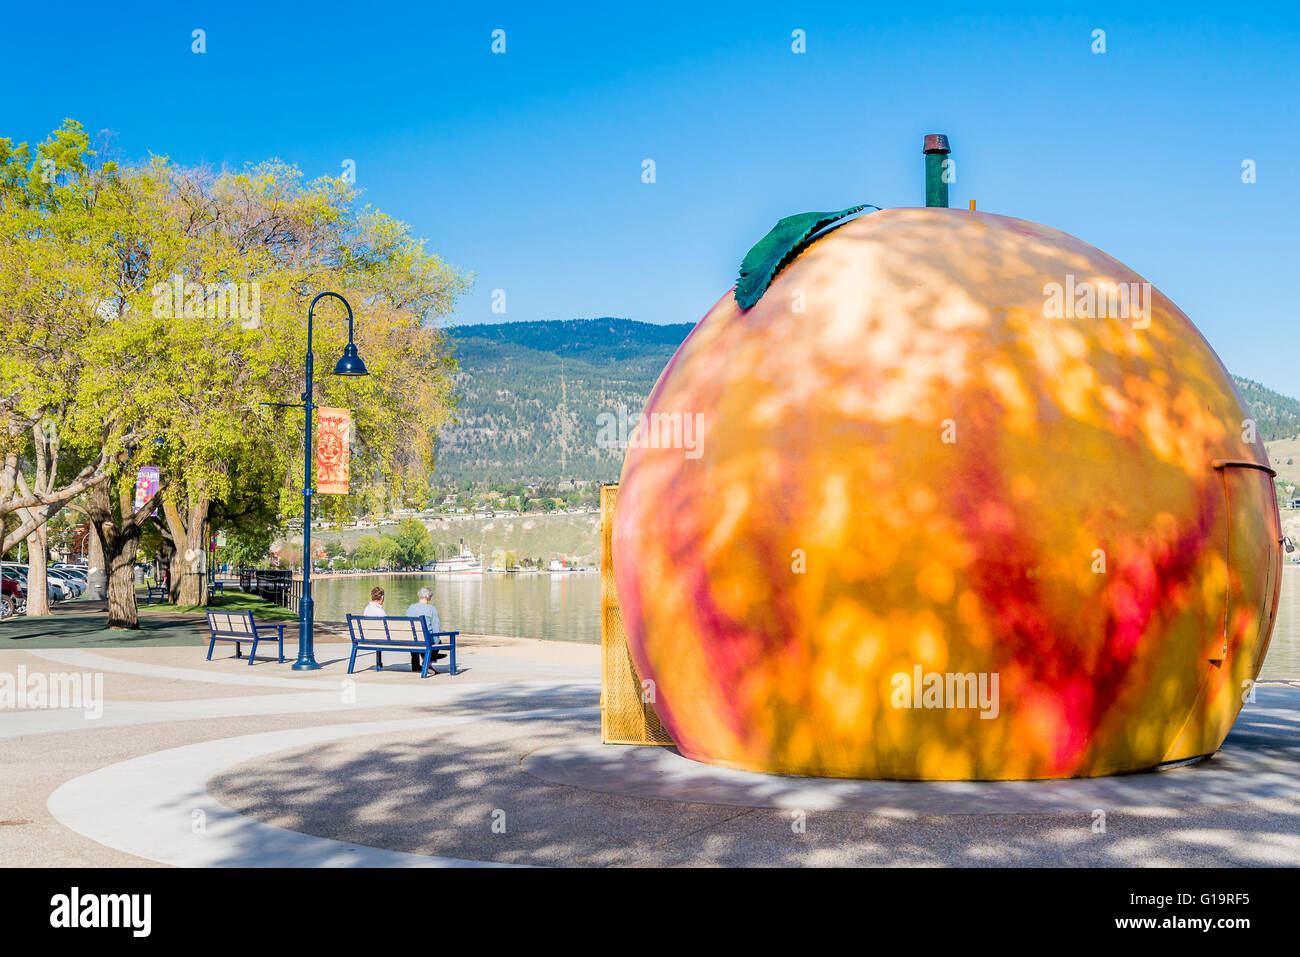 Giant peach refreshment kiosk Penticton, Okanagan Valley, BC British Columbia, Canada Stock Photo